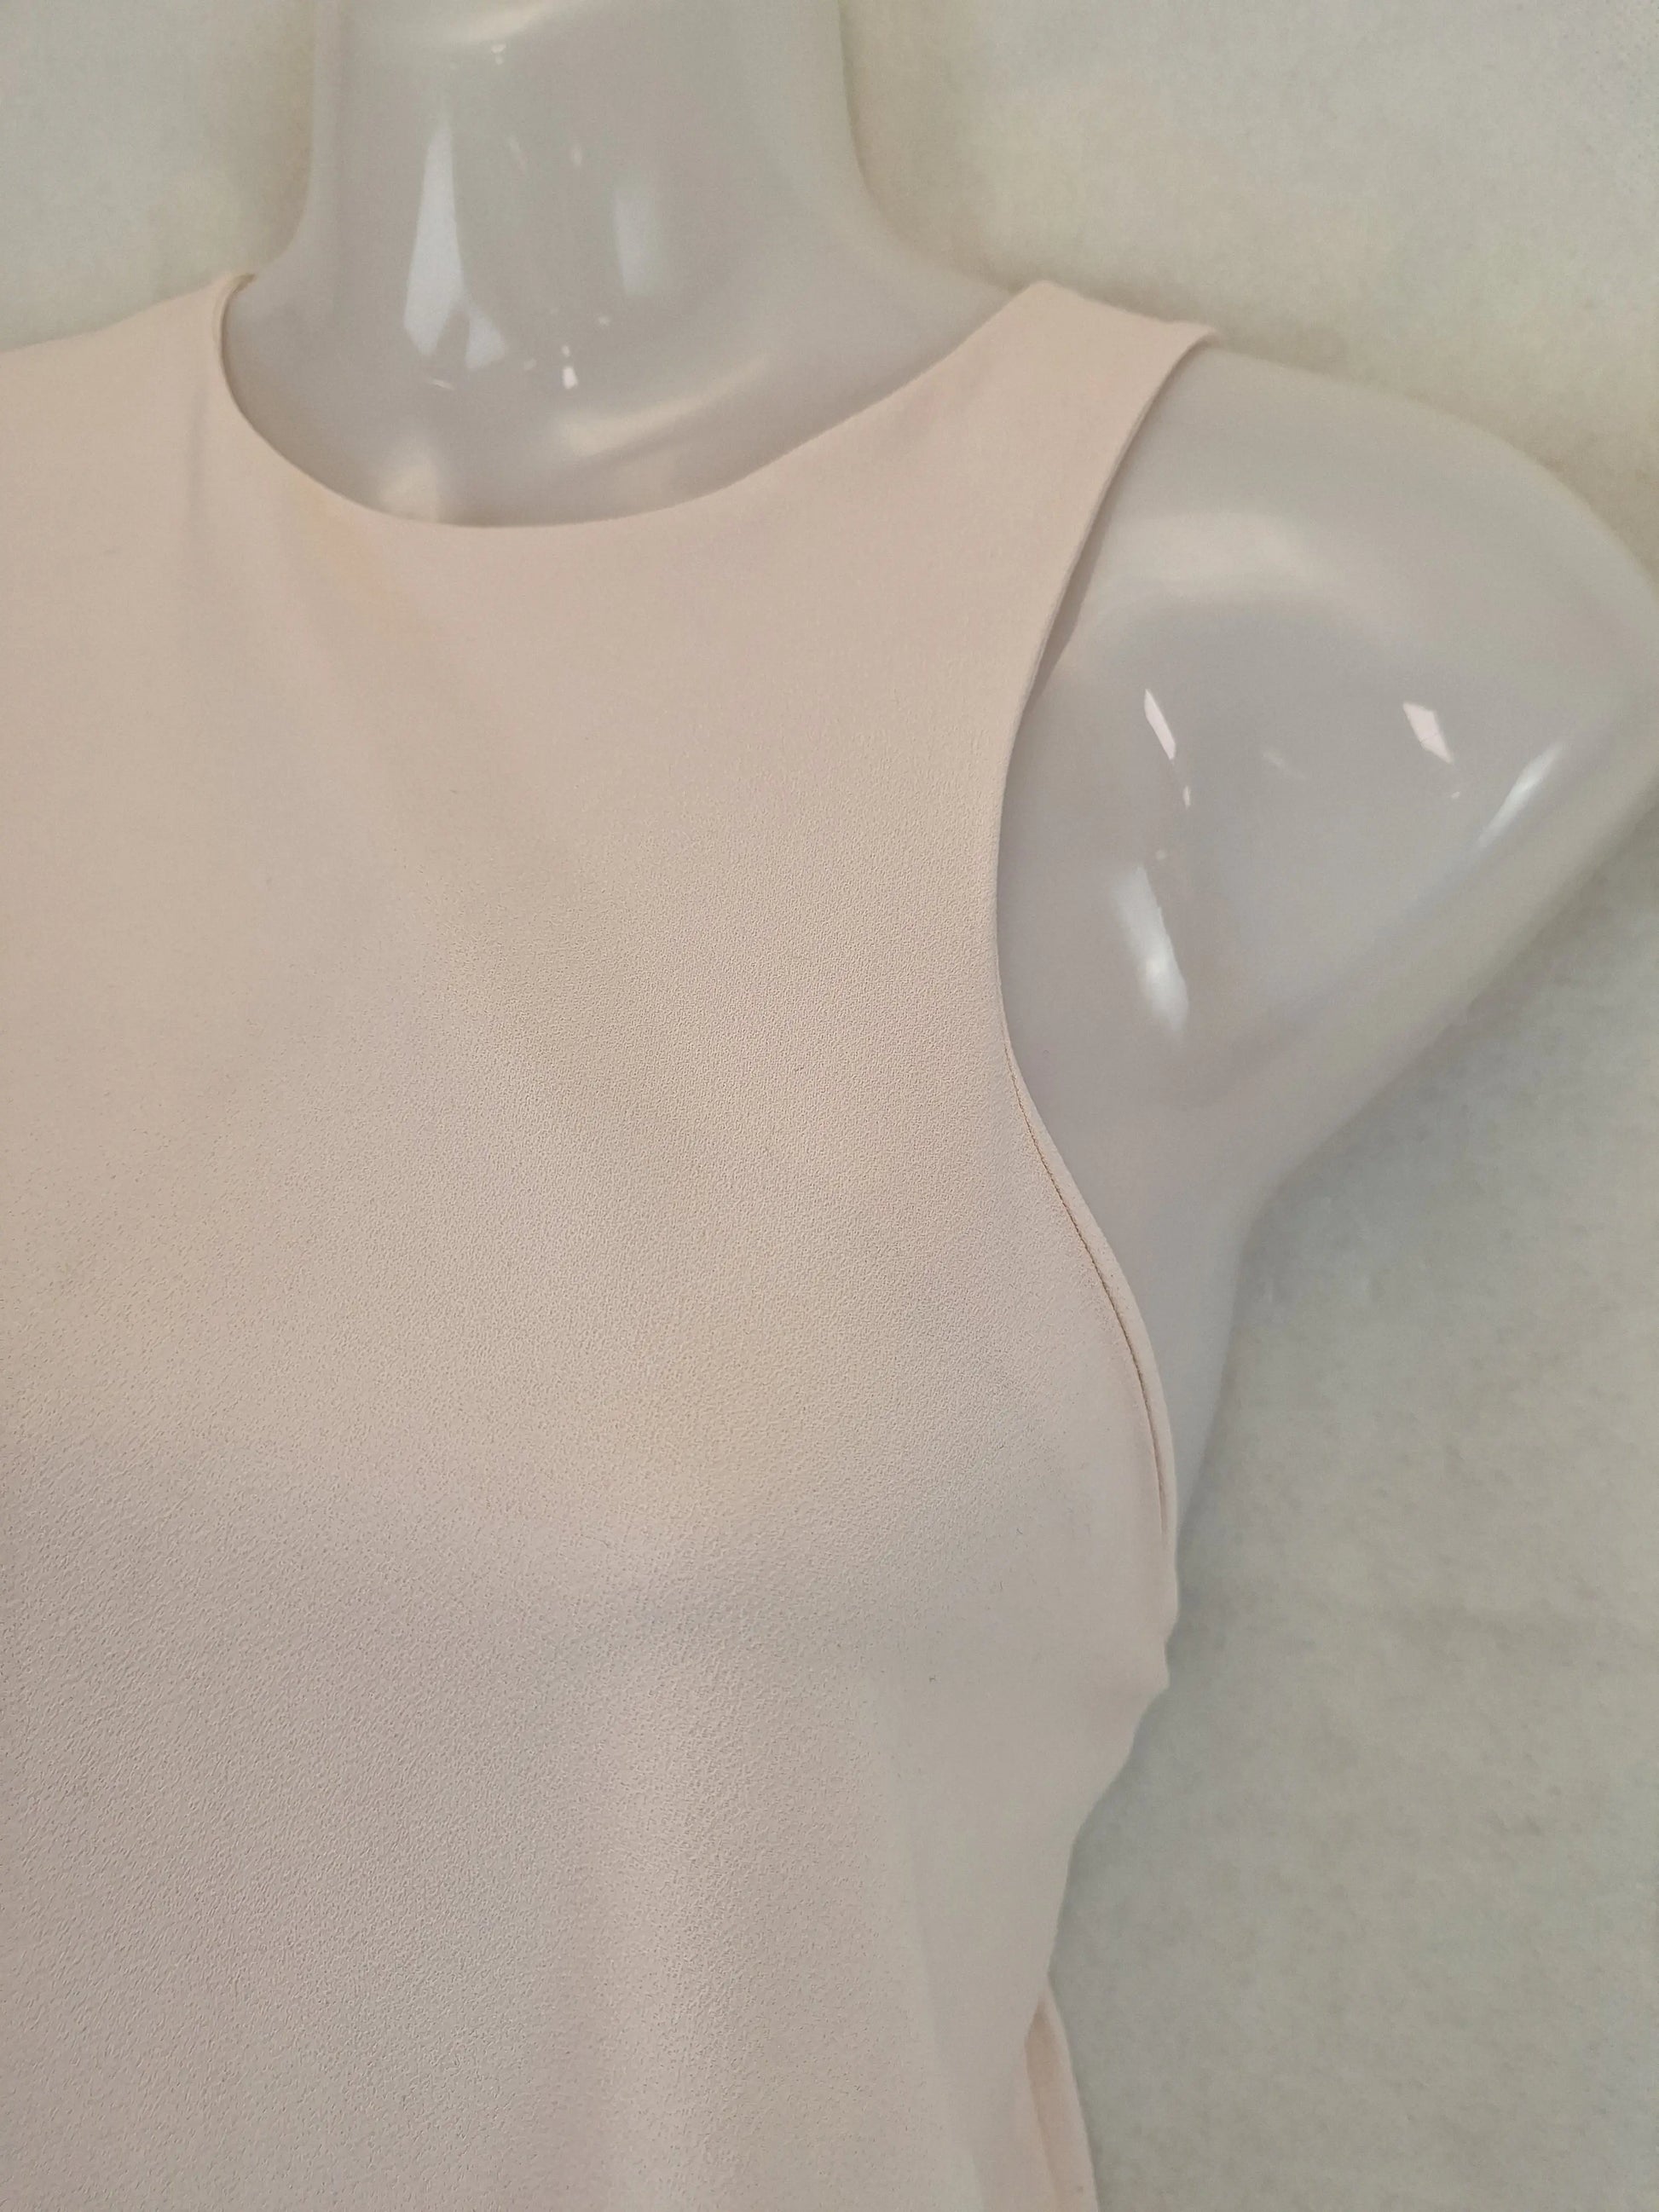 IRO Stylish Asymmetric Blush Mini Dress Size 8 by SwapUp-Online Second Hand Store-Online Thrift Store